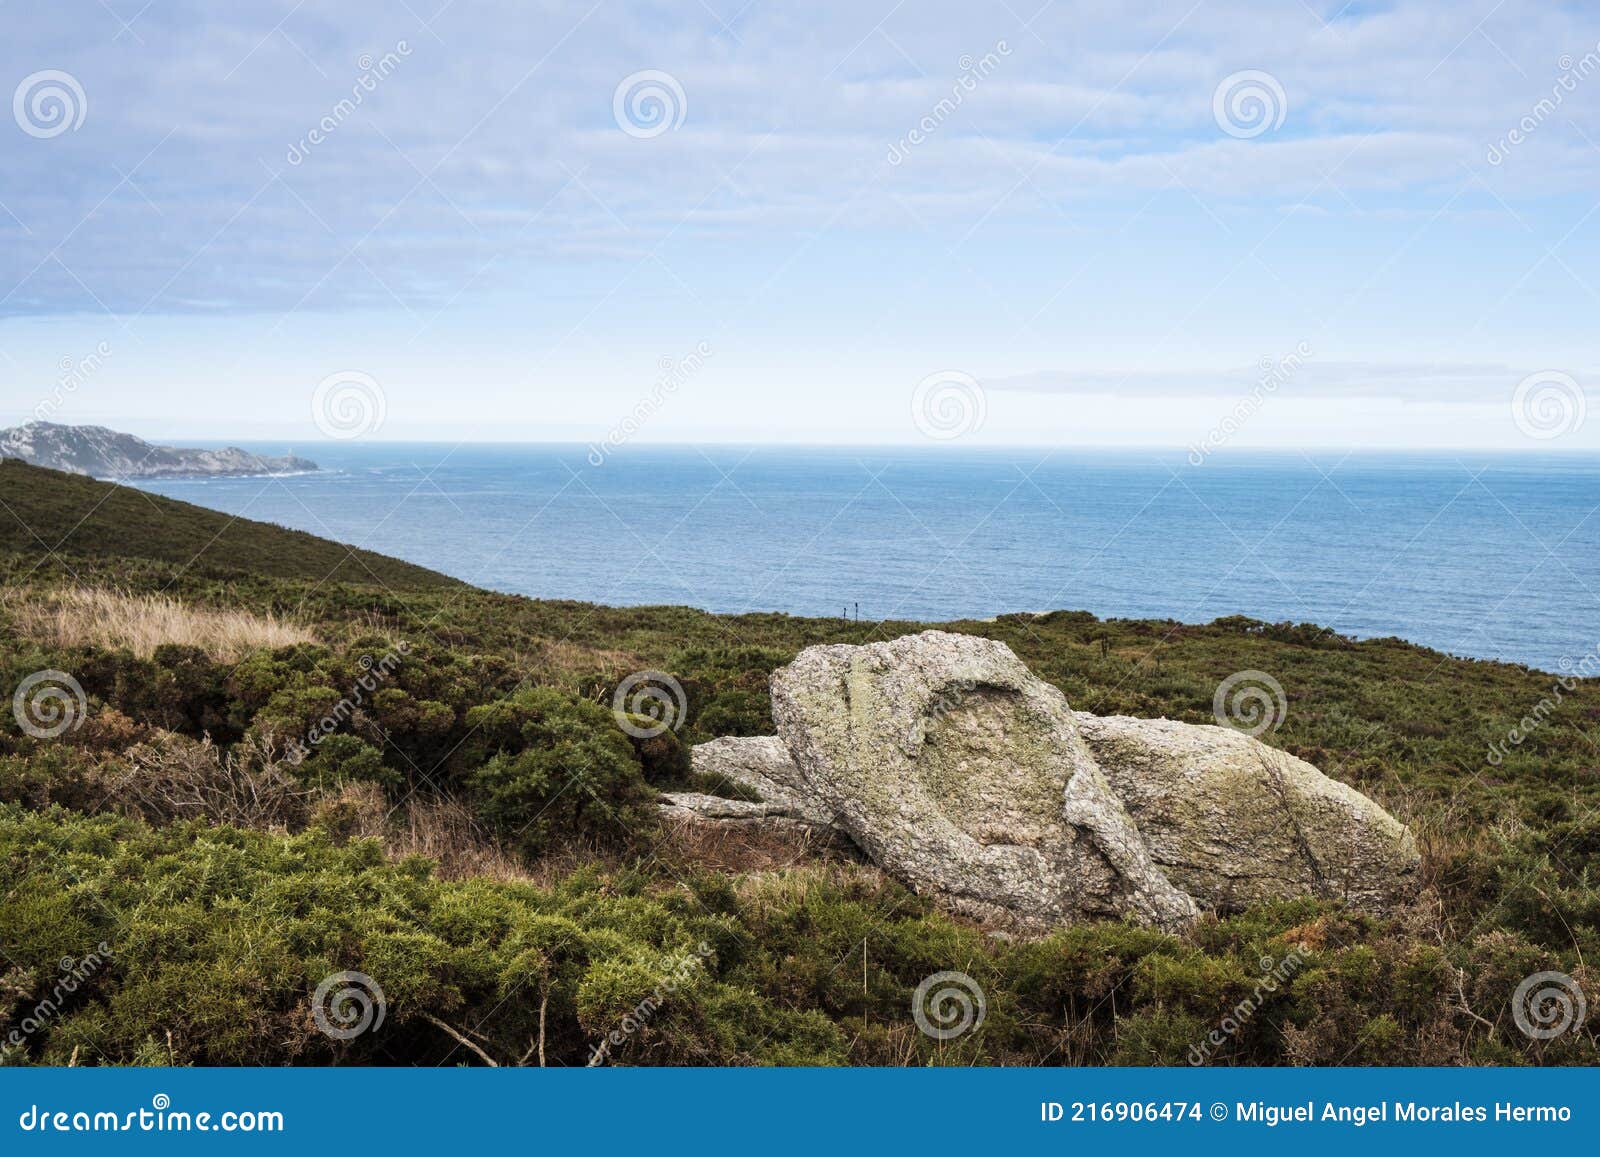 large granite rock on the galician coast spain